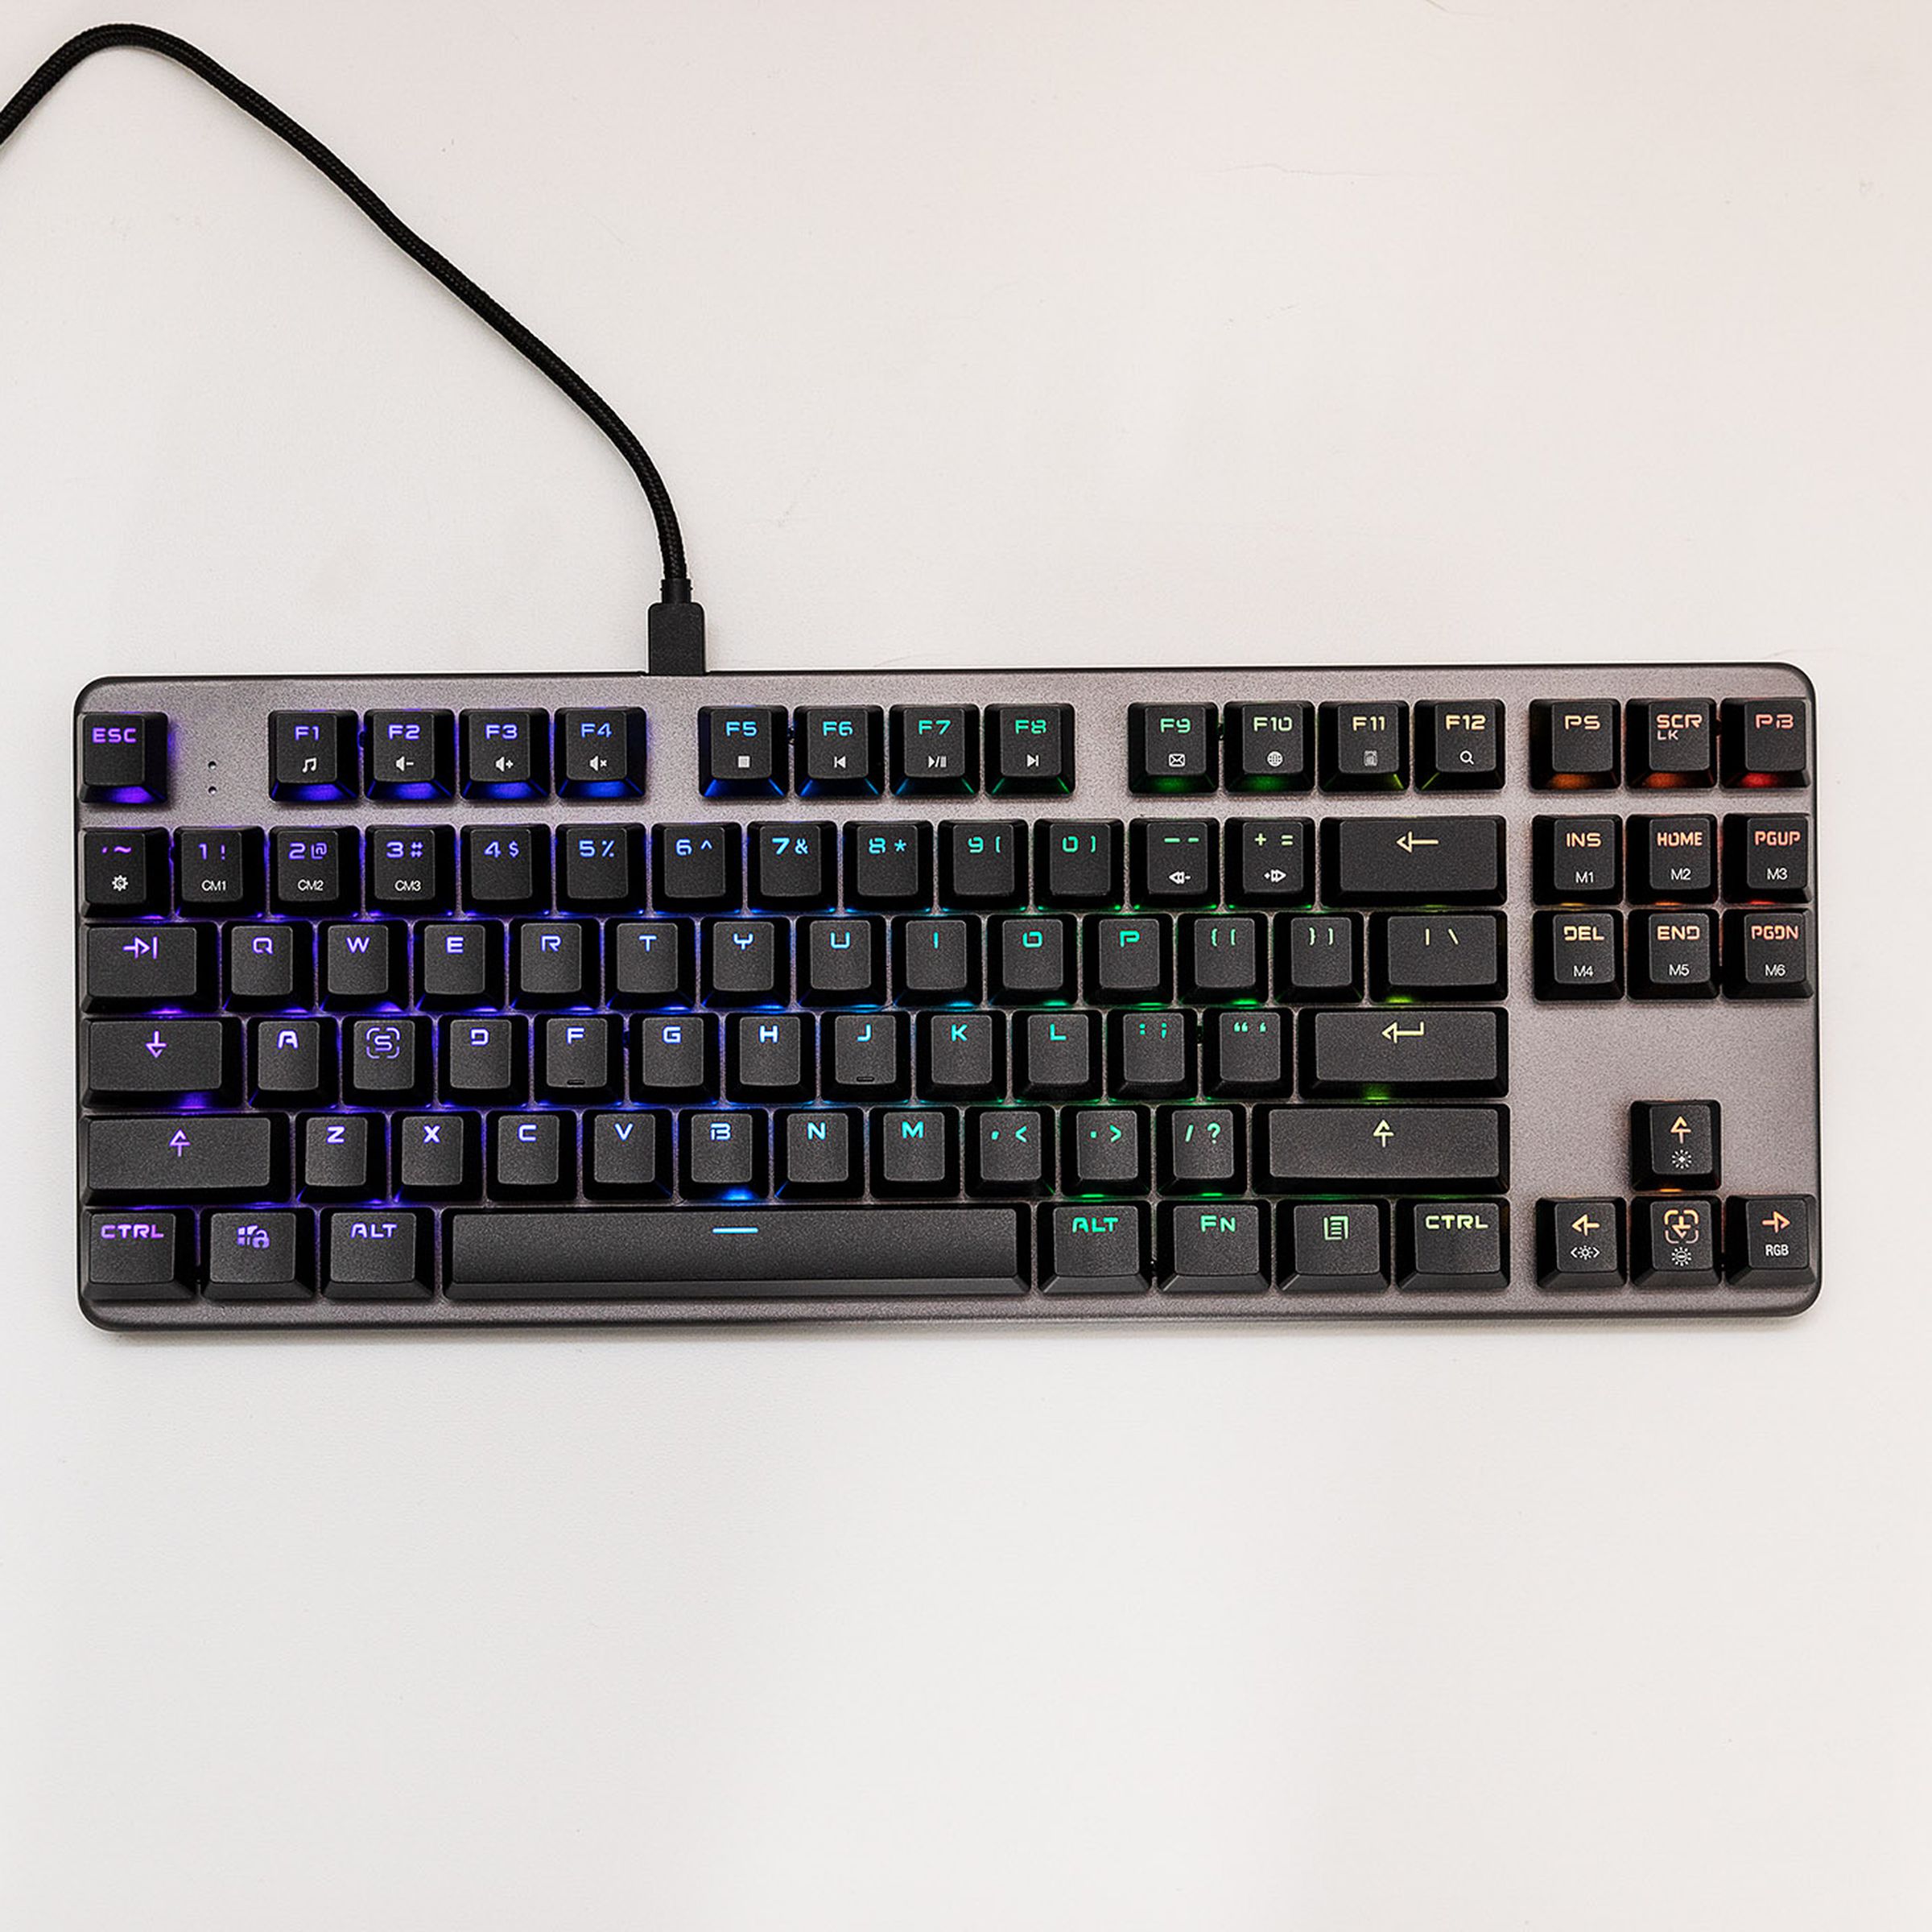 Top-down shot of a tenkeyless mechanical keyboard with RGB shinethrough backlighting.